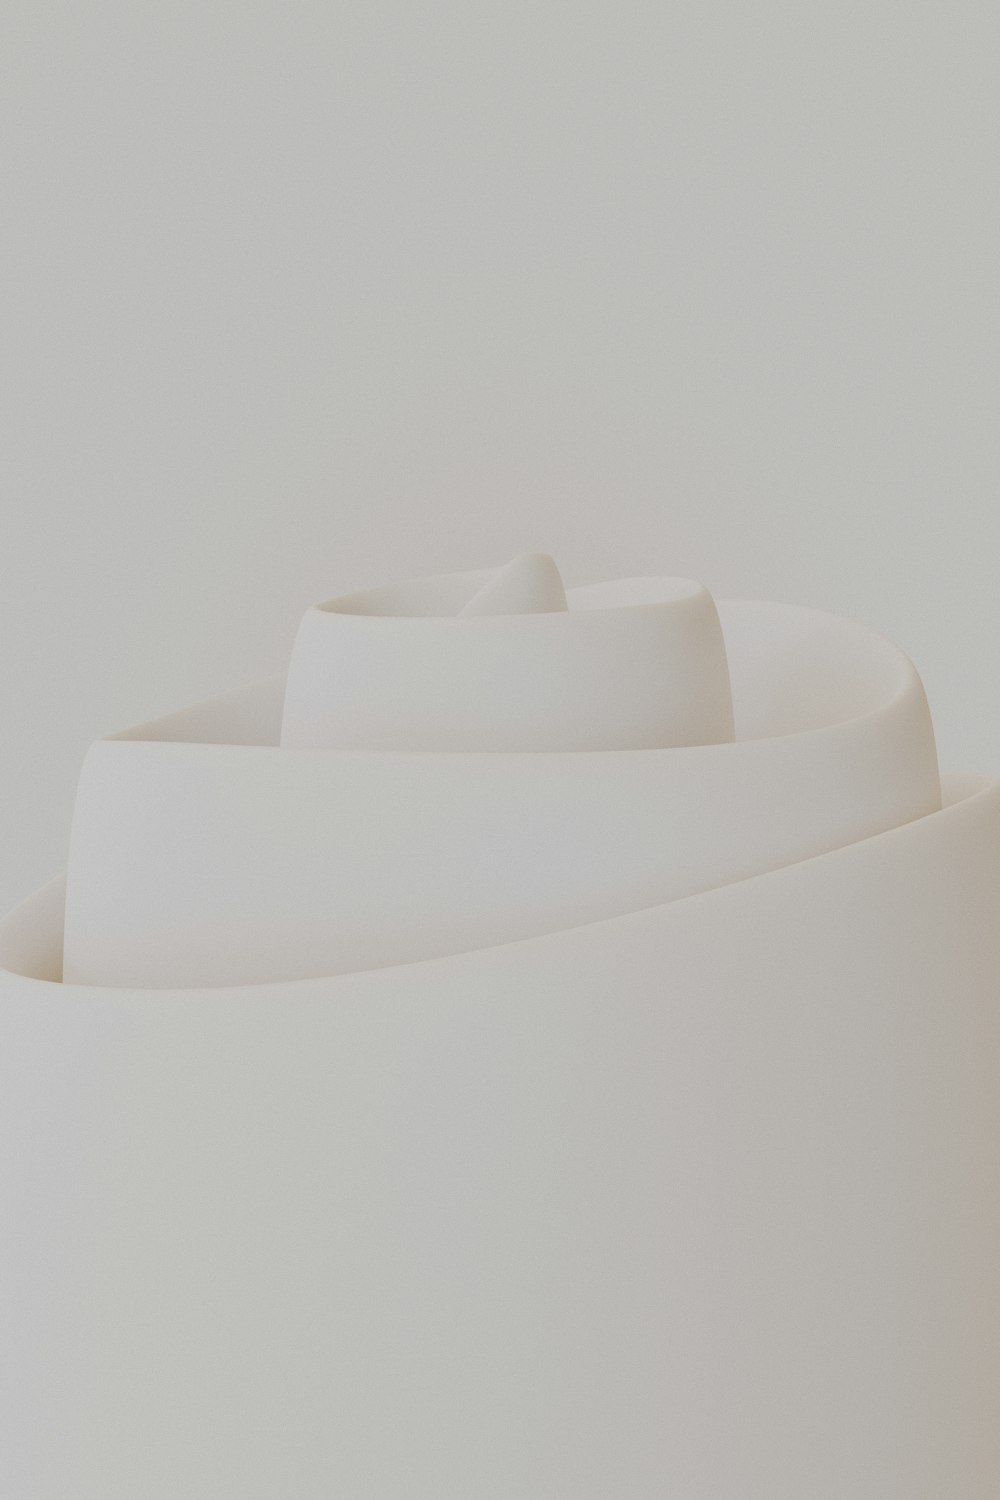 Un primer plano de un objeto blanco con un fondo blanco